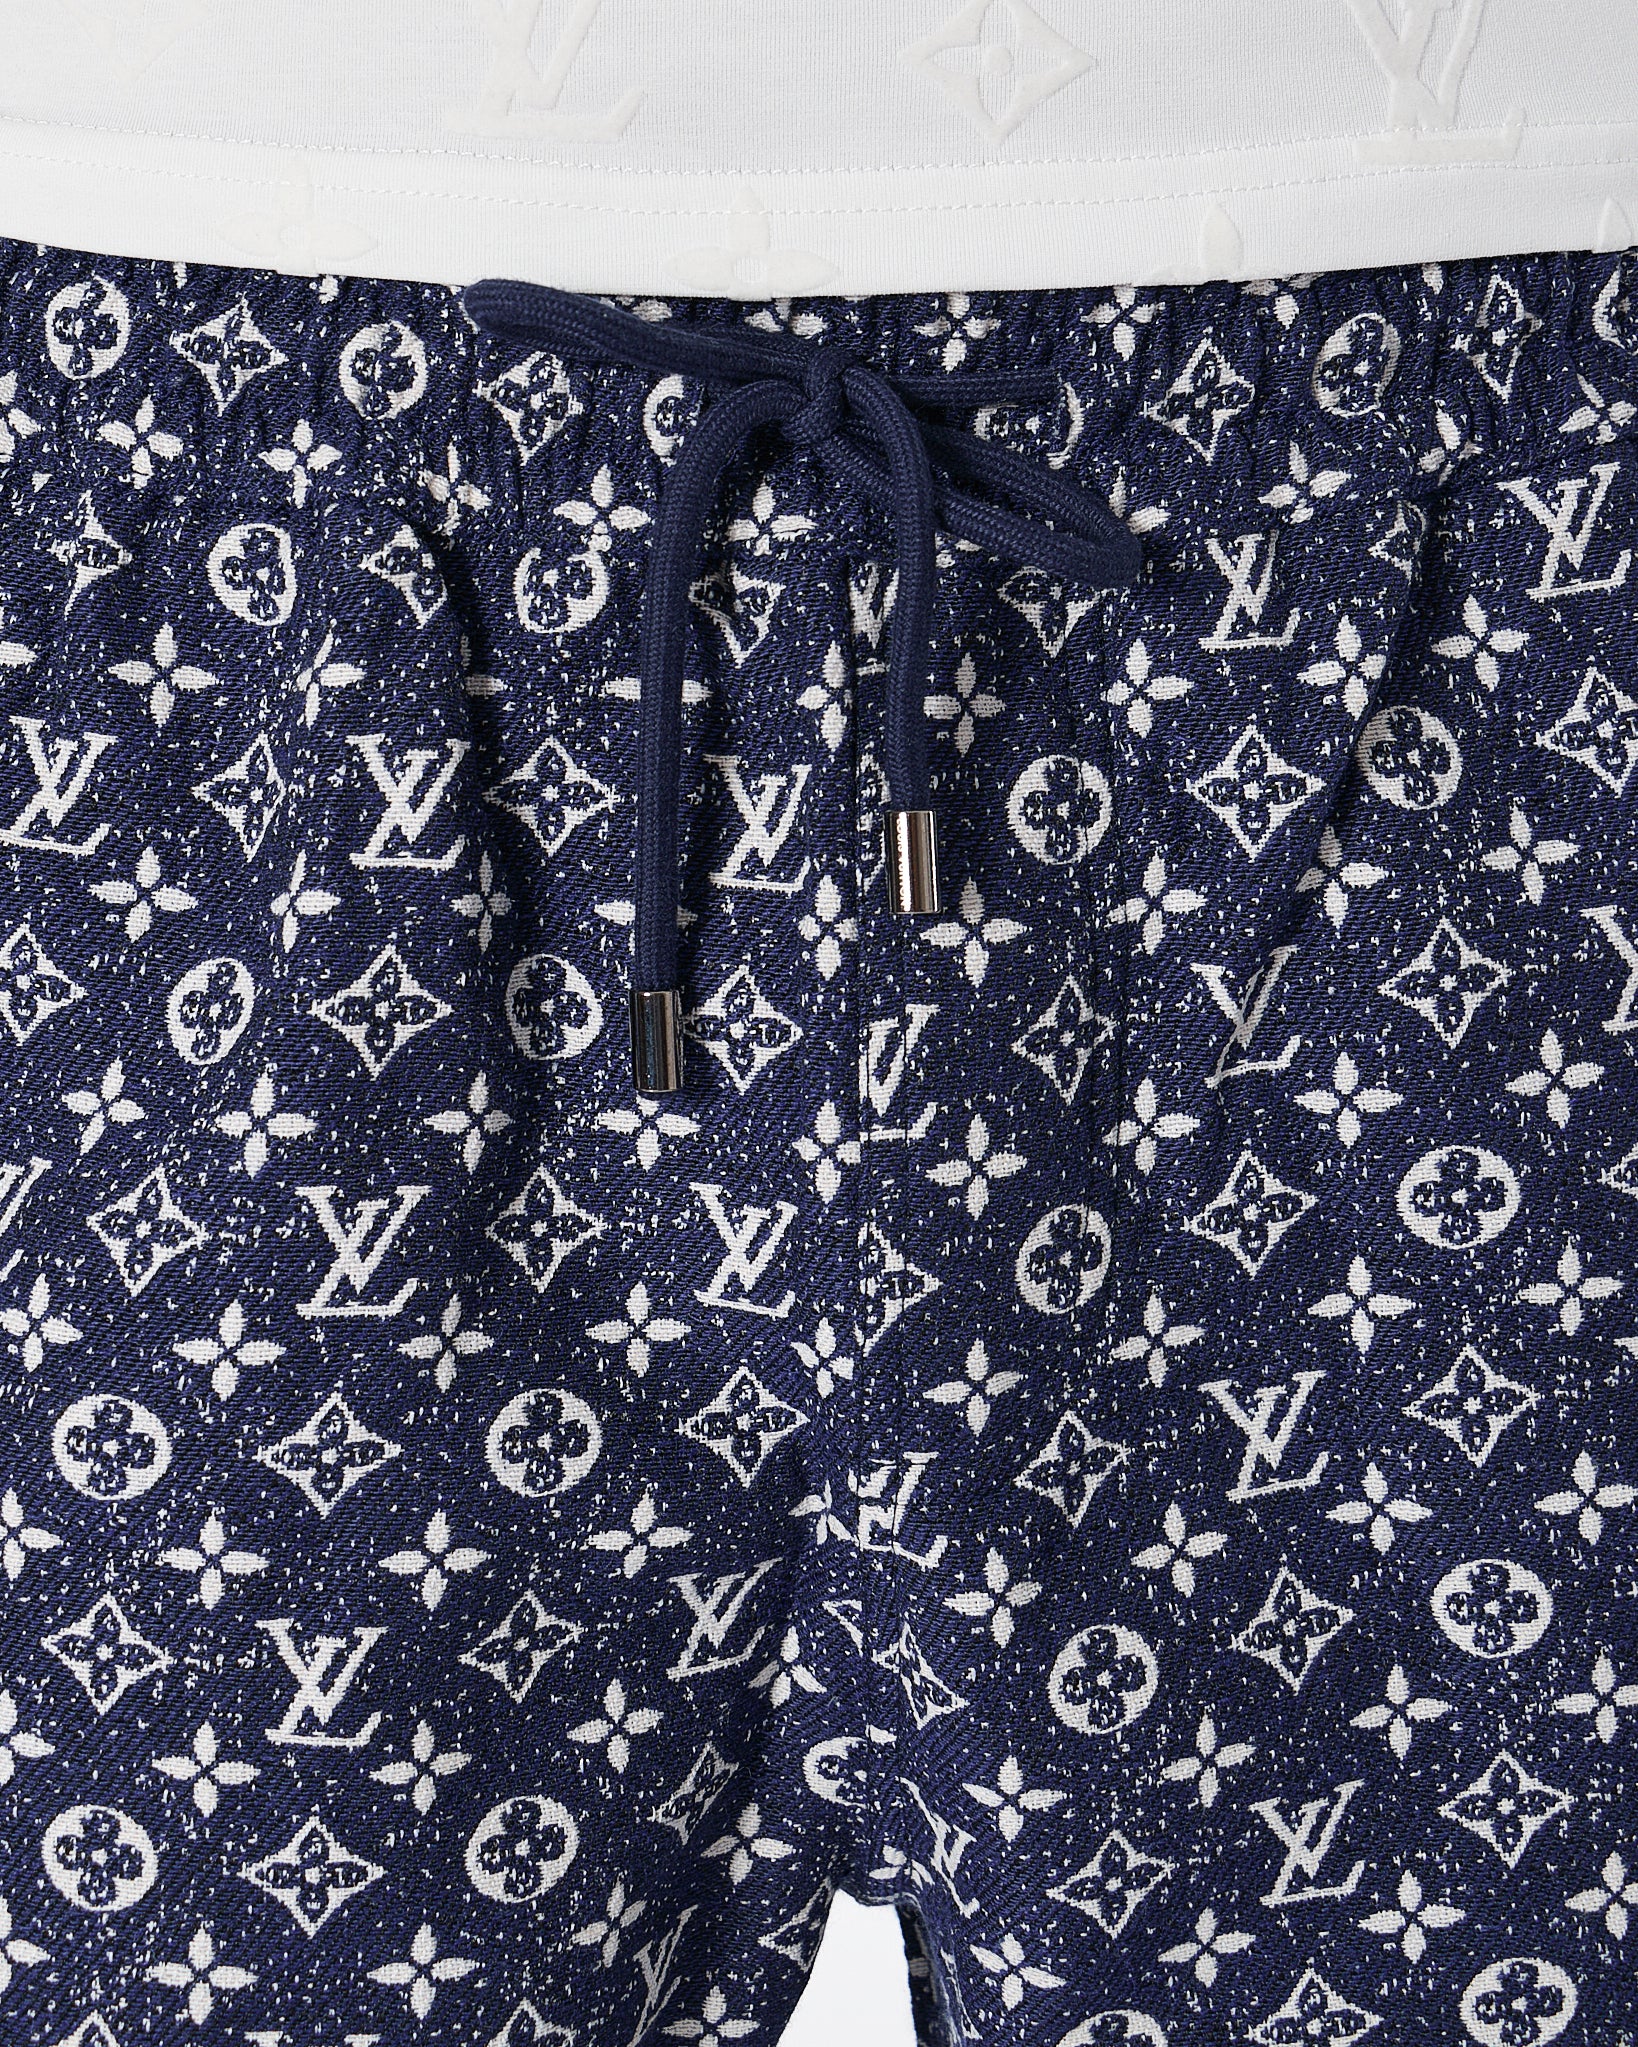 LV Monogram Over Printed Men Dark Blue Shorts 27.90